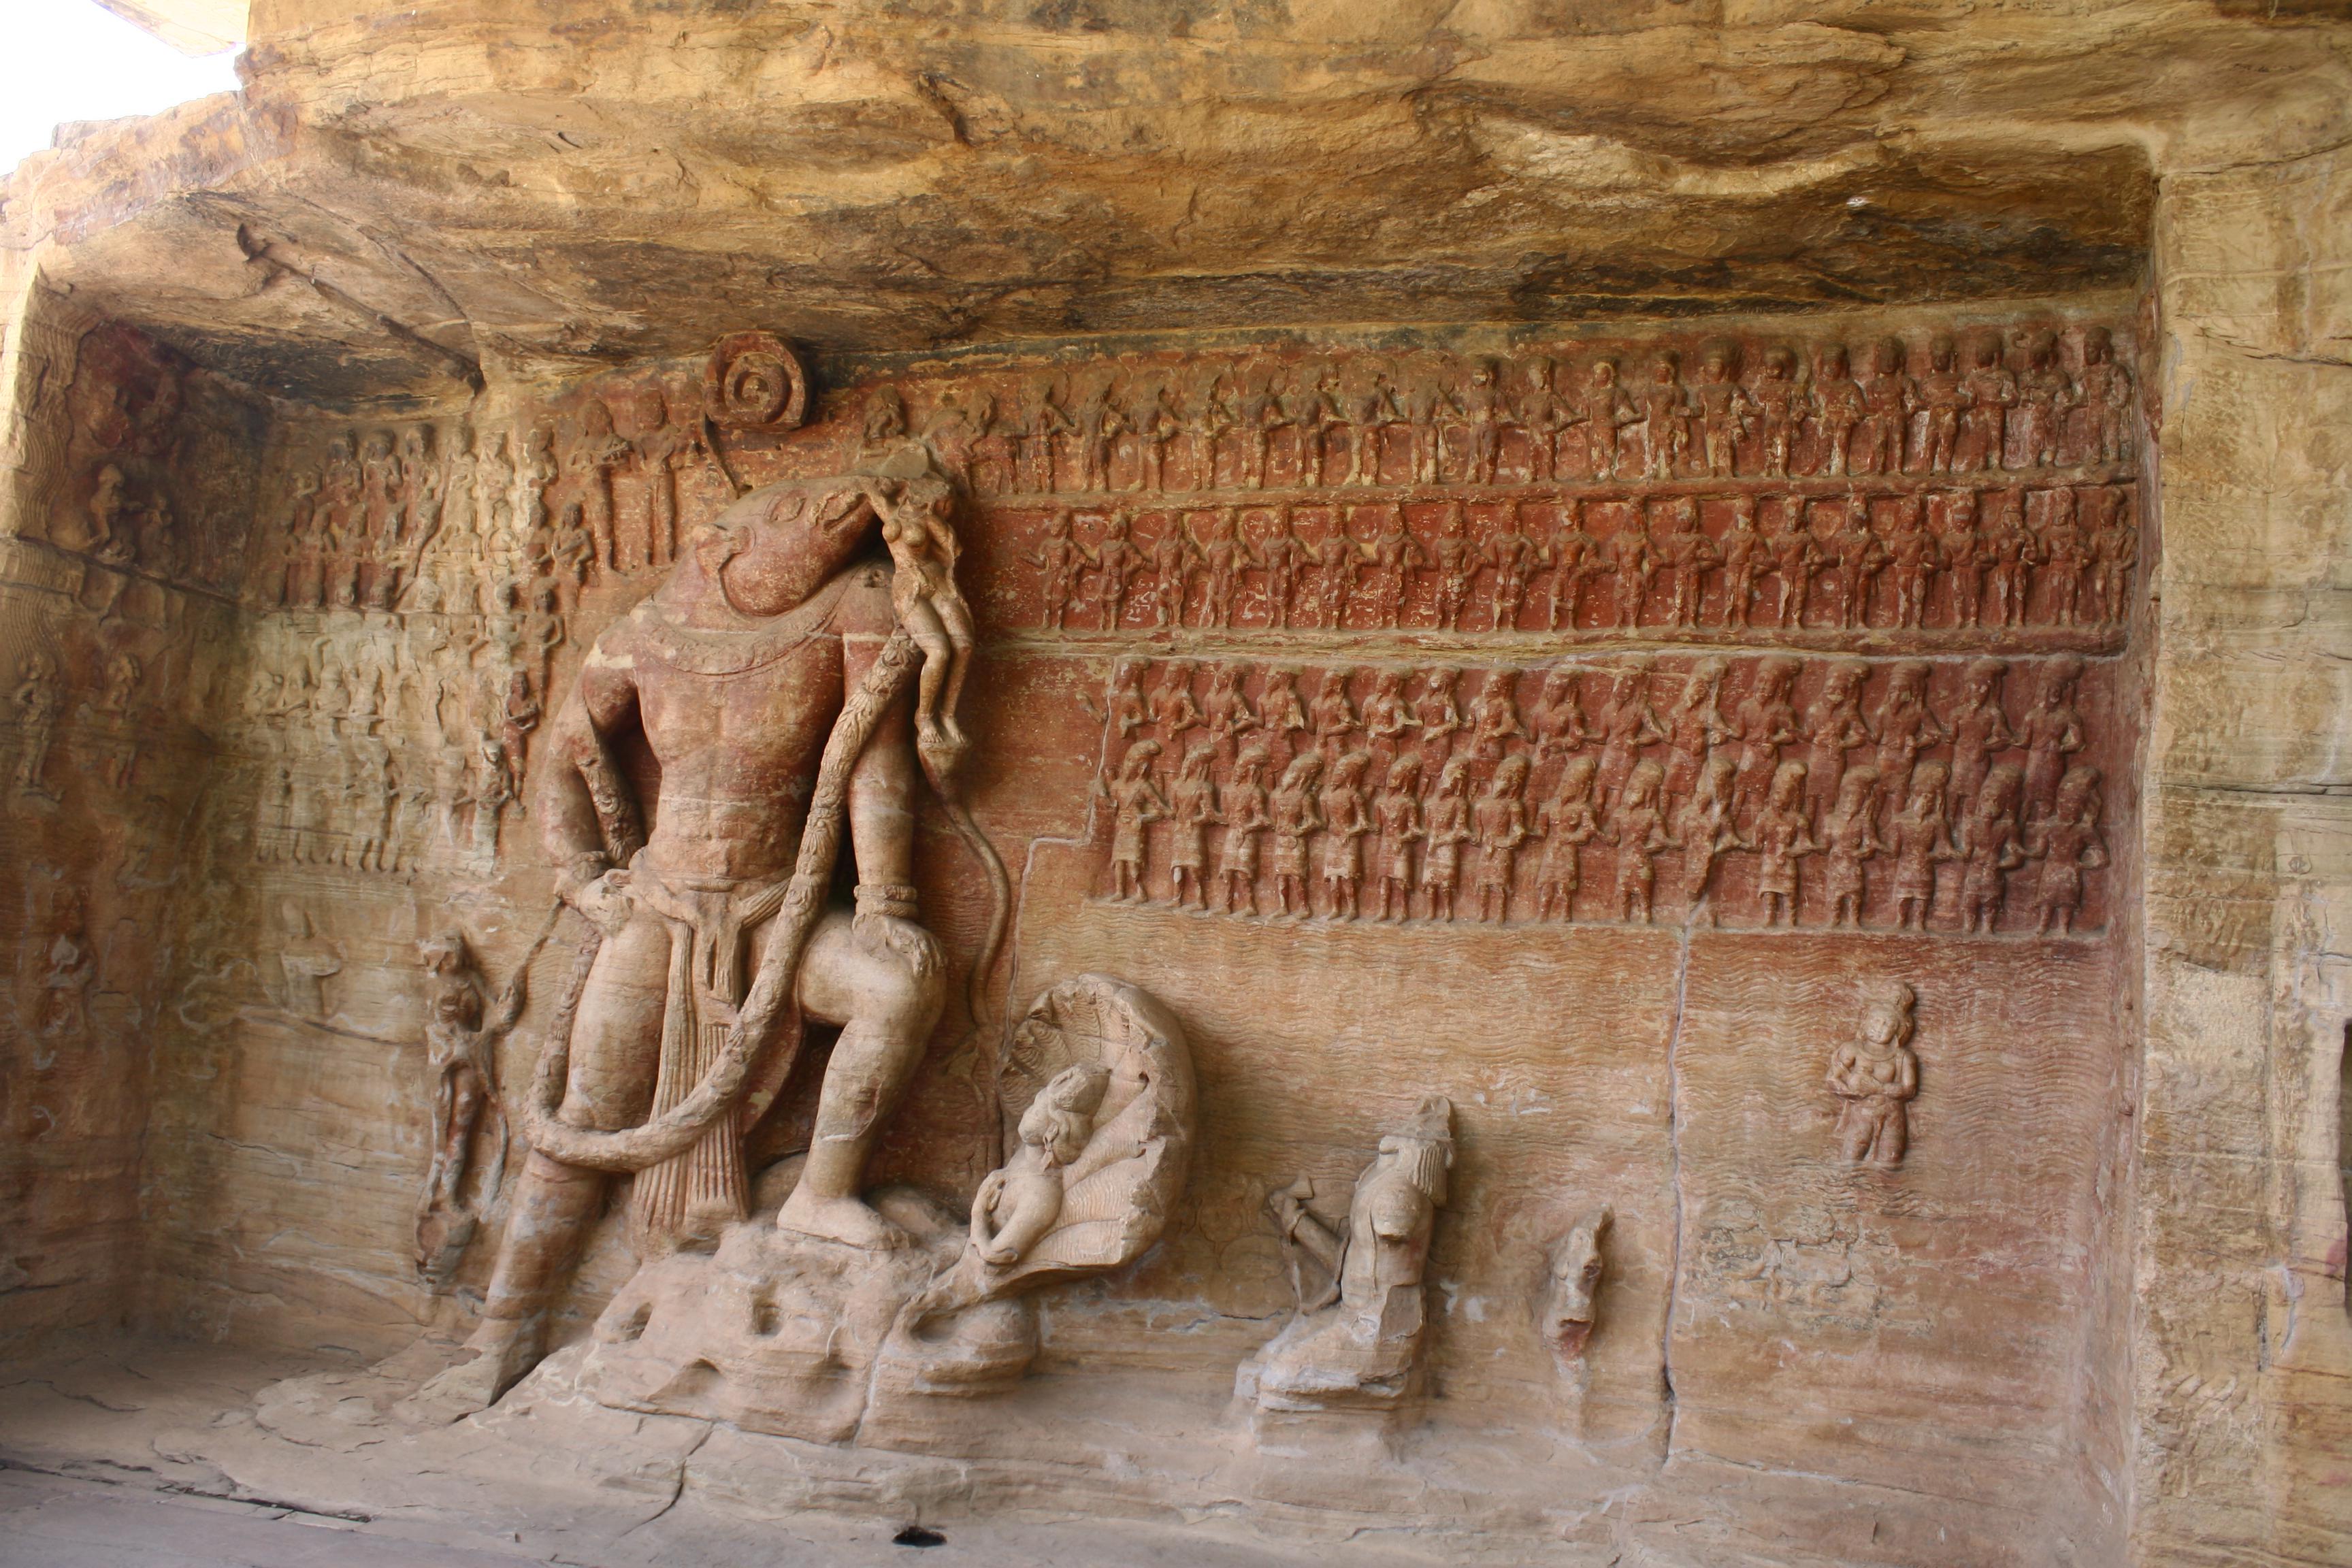 Caves in India, Hindu leni, Wamanavtar, Vidisha, Madhyapradesh 